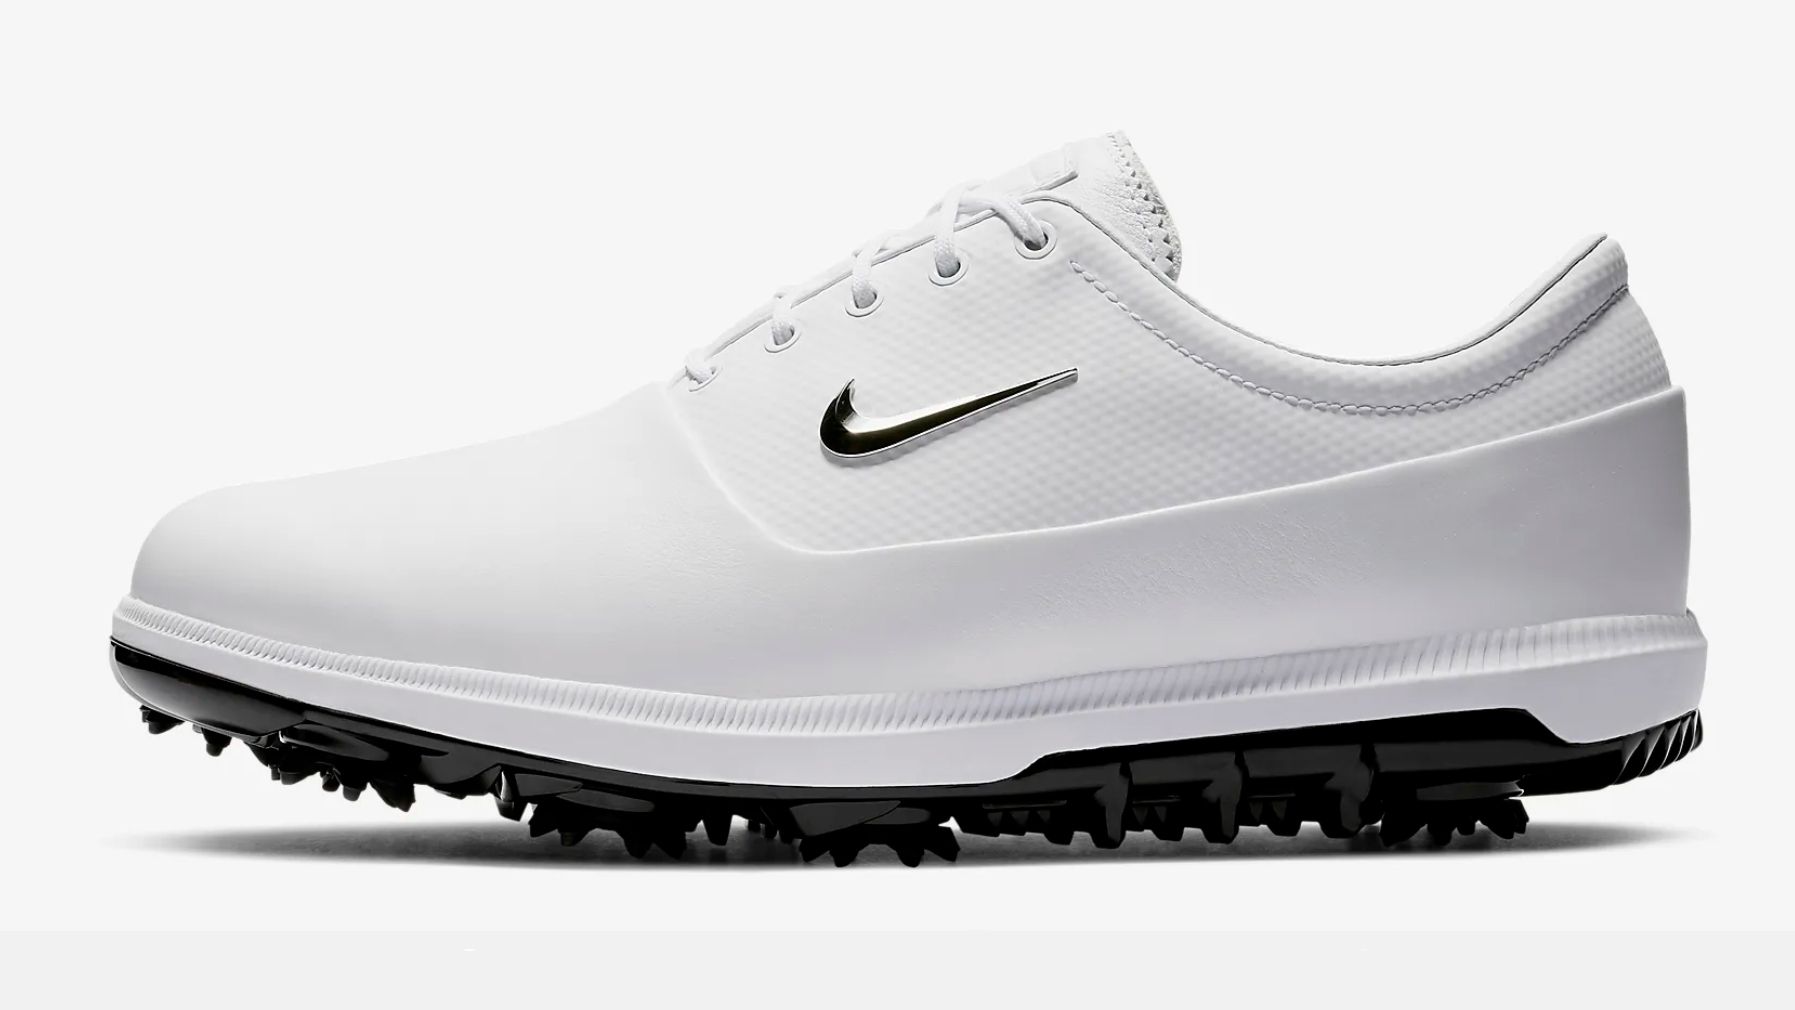 parhaat lahjat golfaajille: Nike Air Zoom Victory Tour Golf kengät